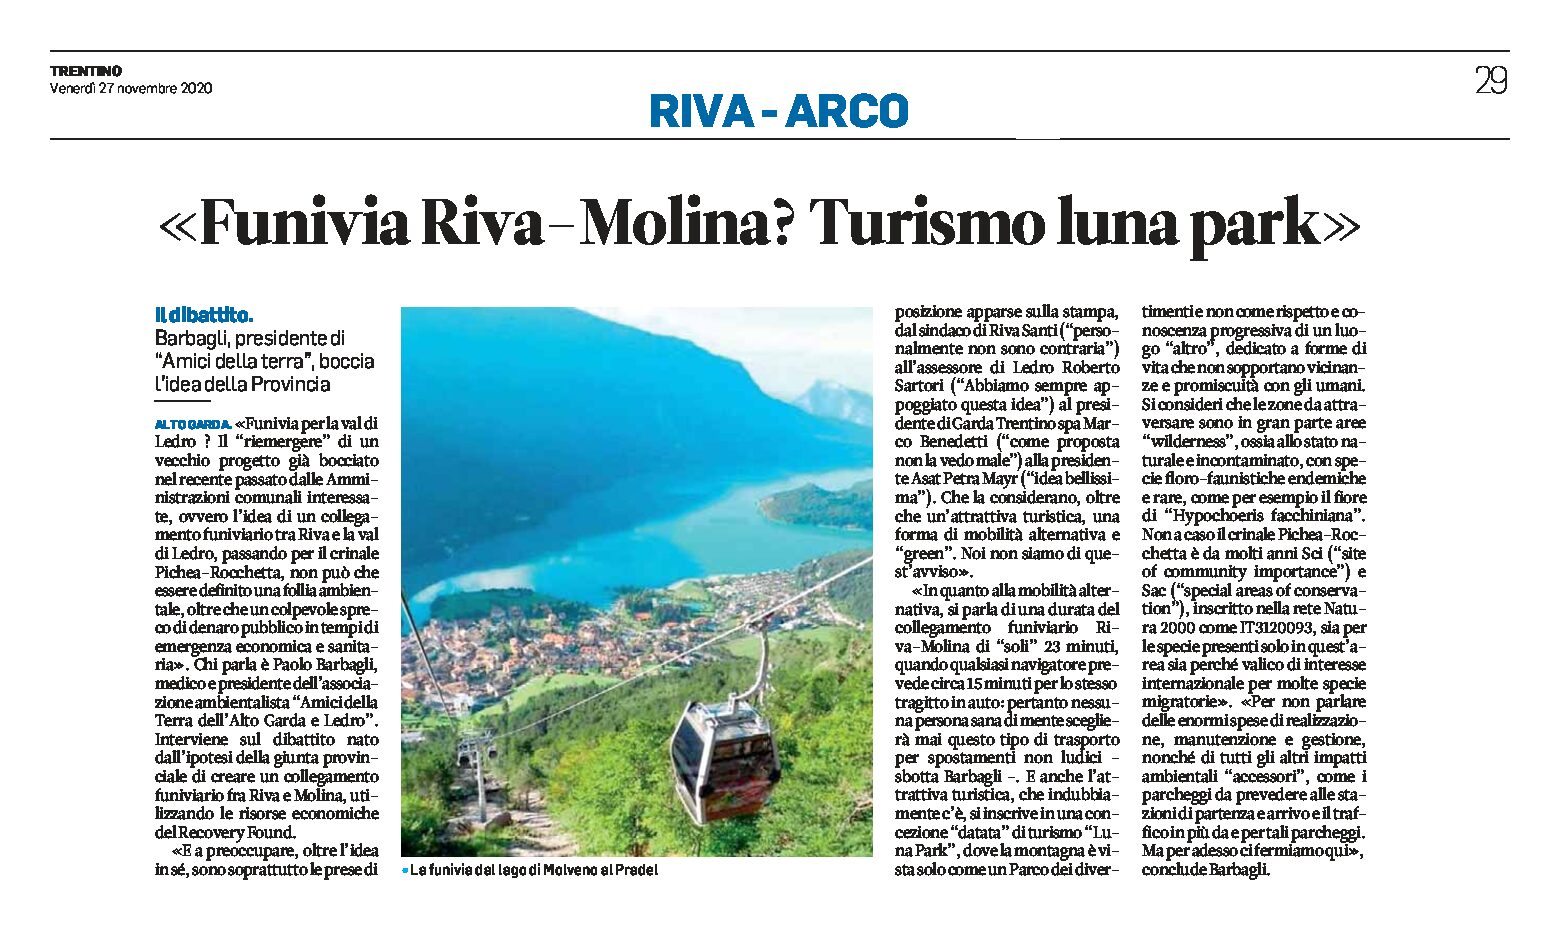 Funivia Riva-Molina: turismo luna park